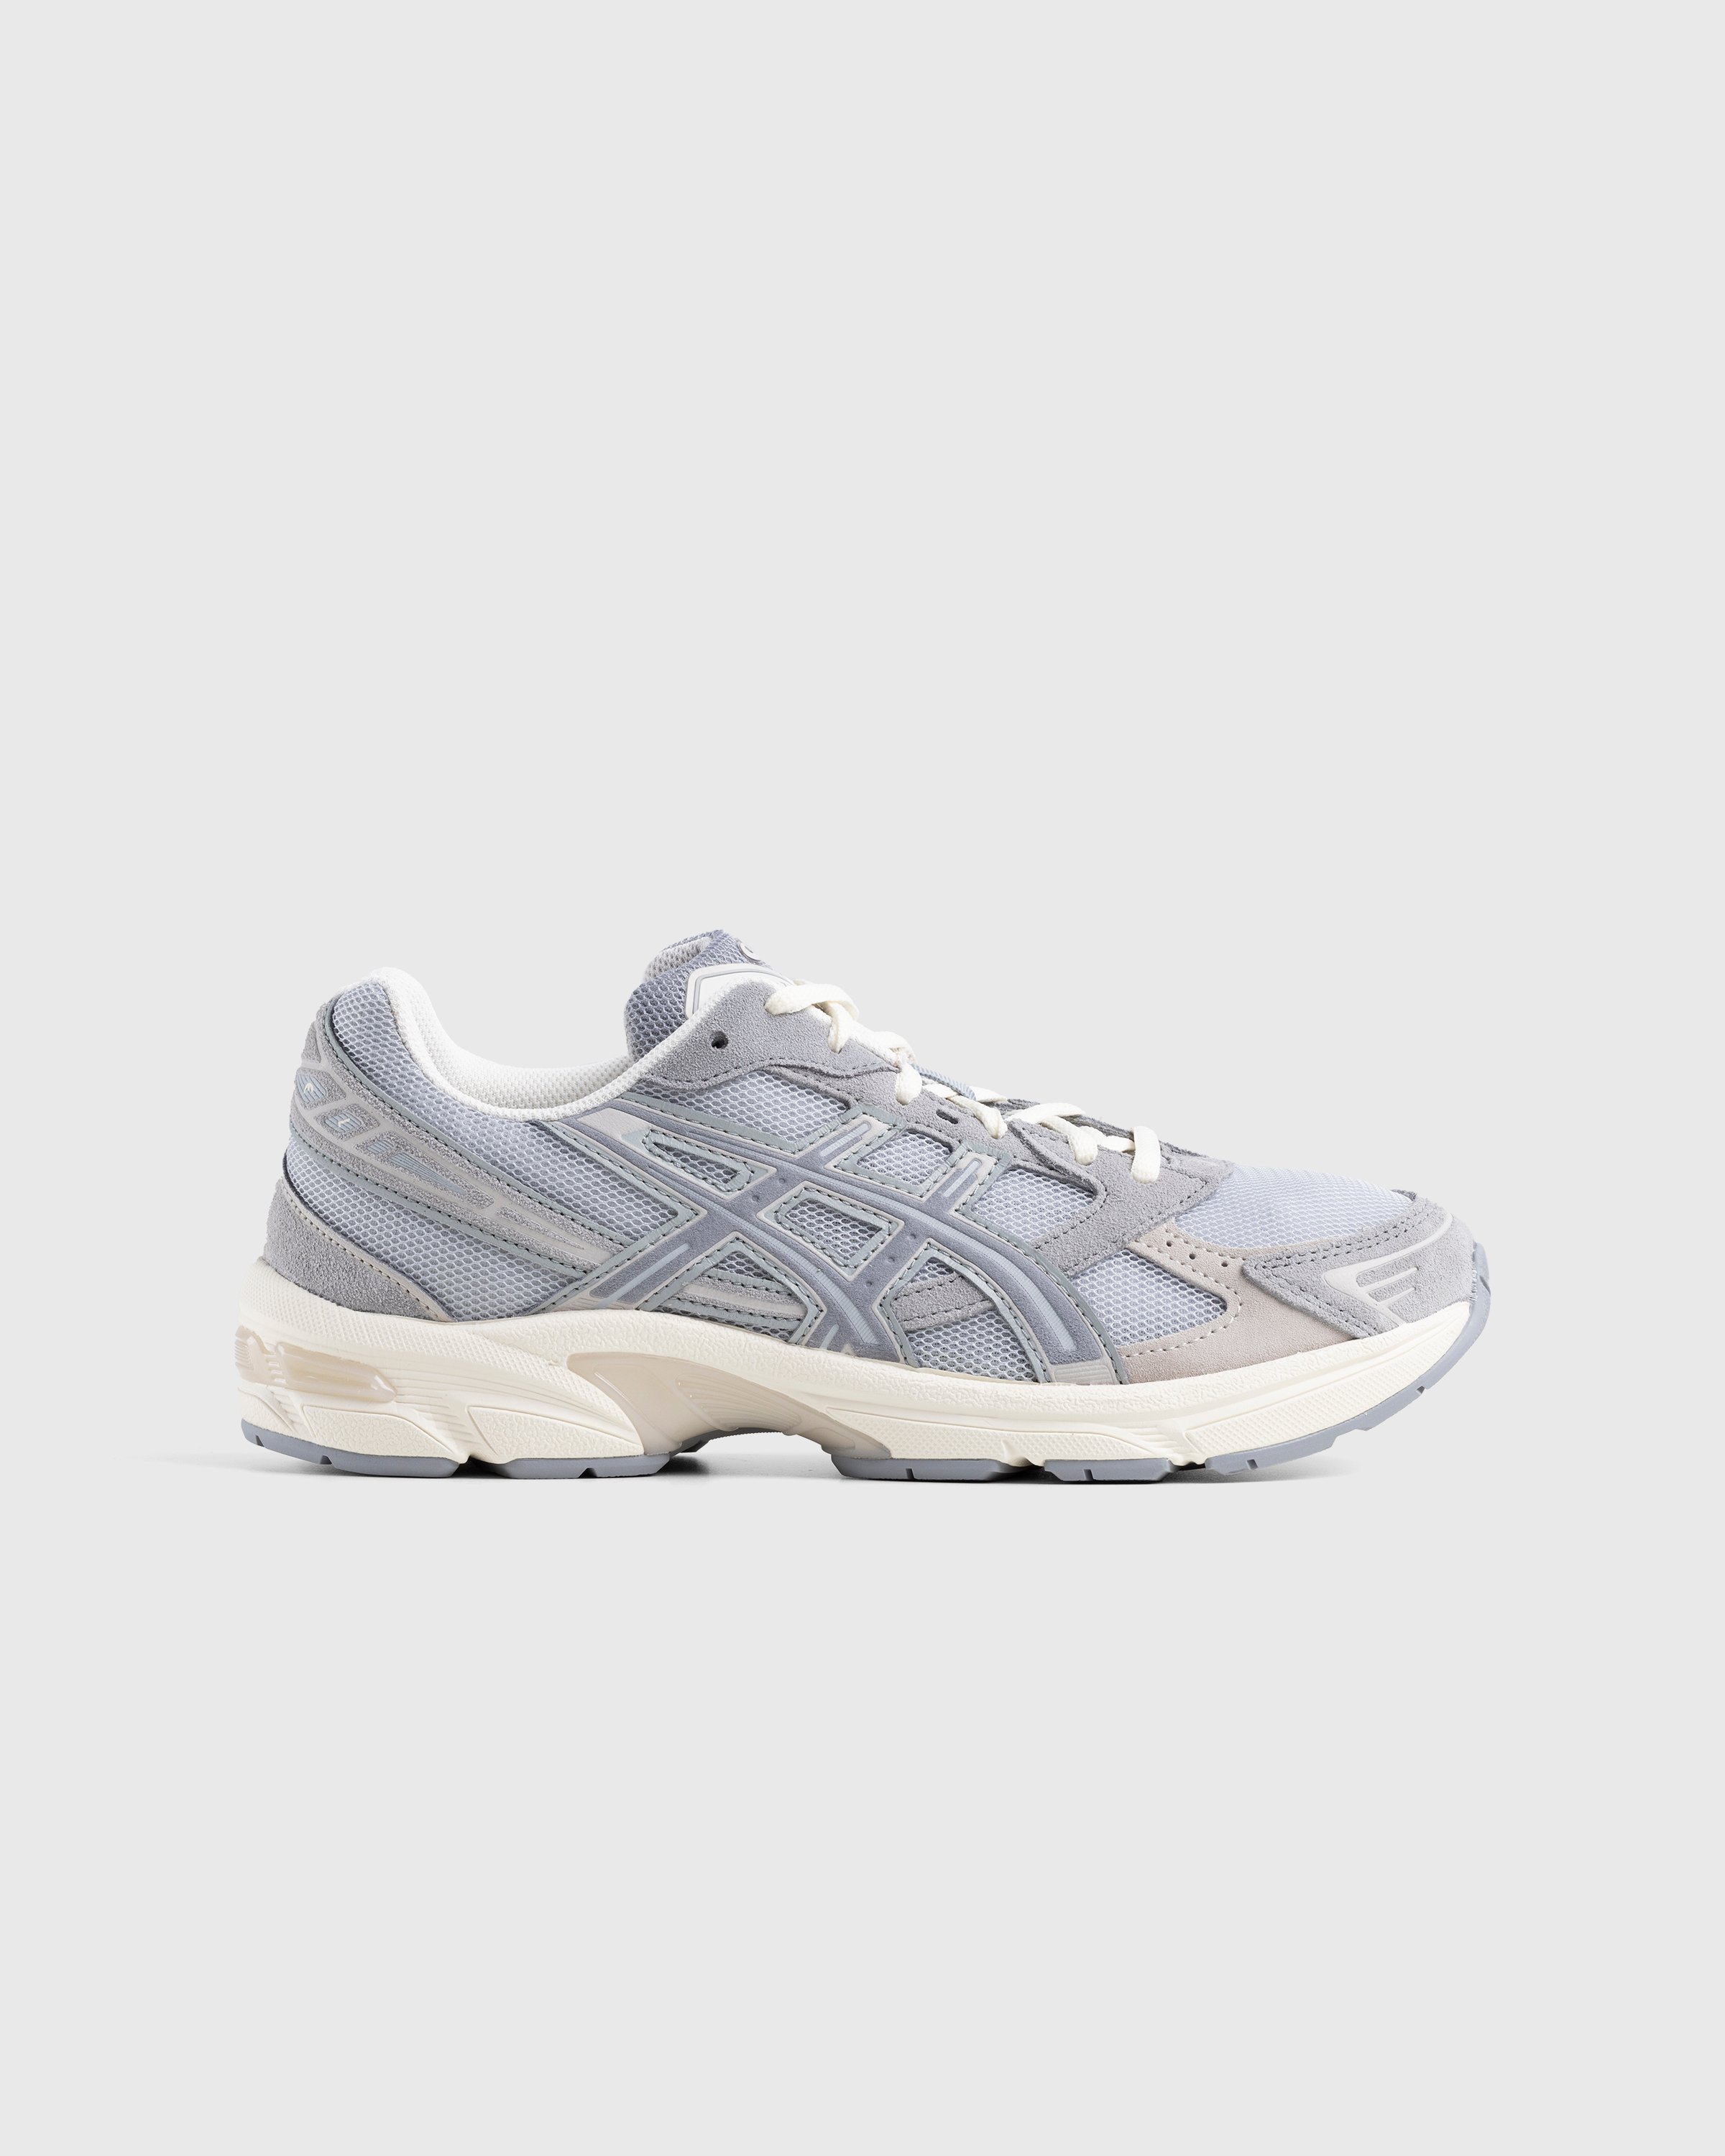 asics - Gel-1130 Piedmont Grey/Sheet Rock - Footwear - Grey - Image 1